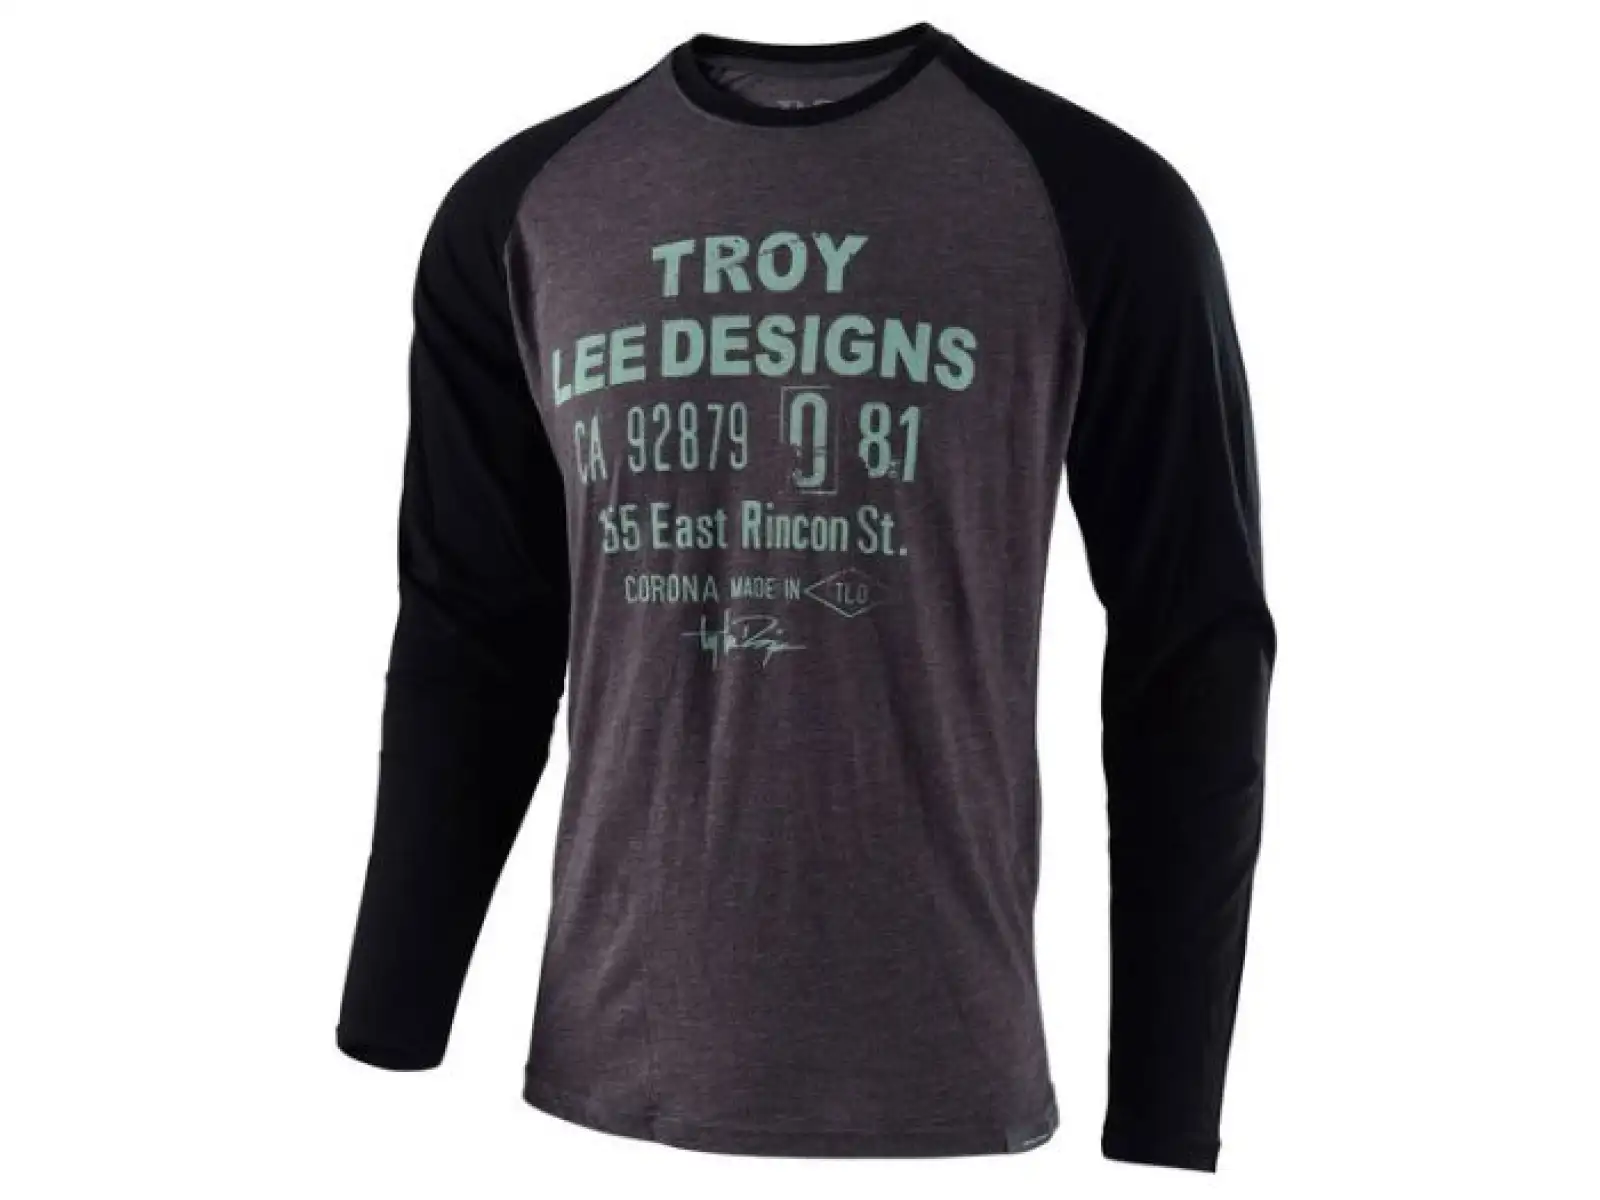 Troy Lee Designs Cargo Shirt Charcoal/Black